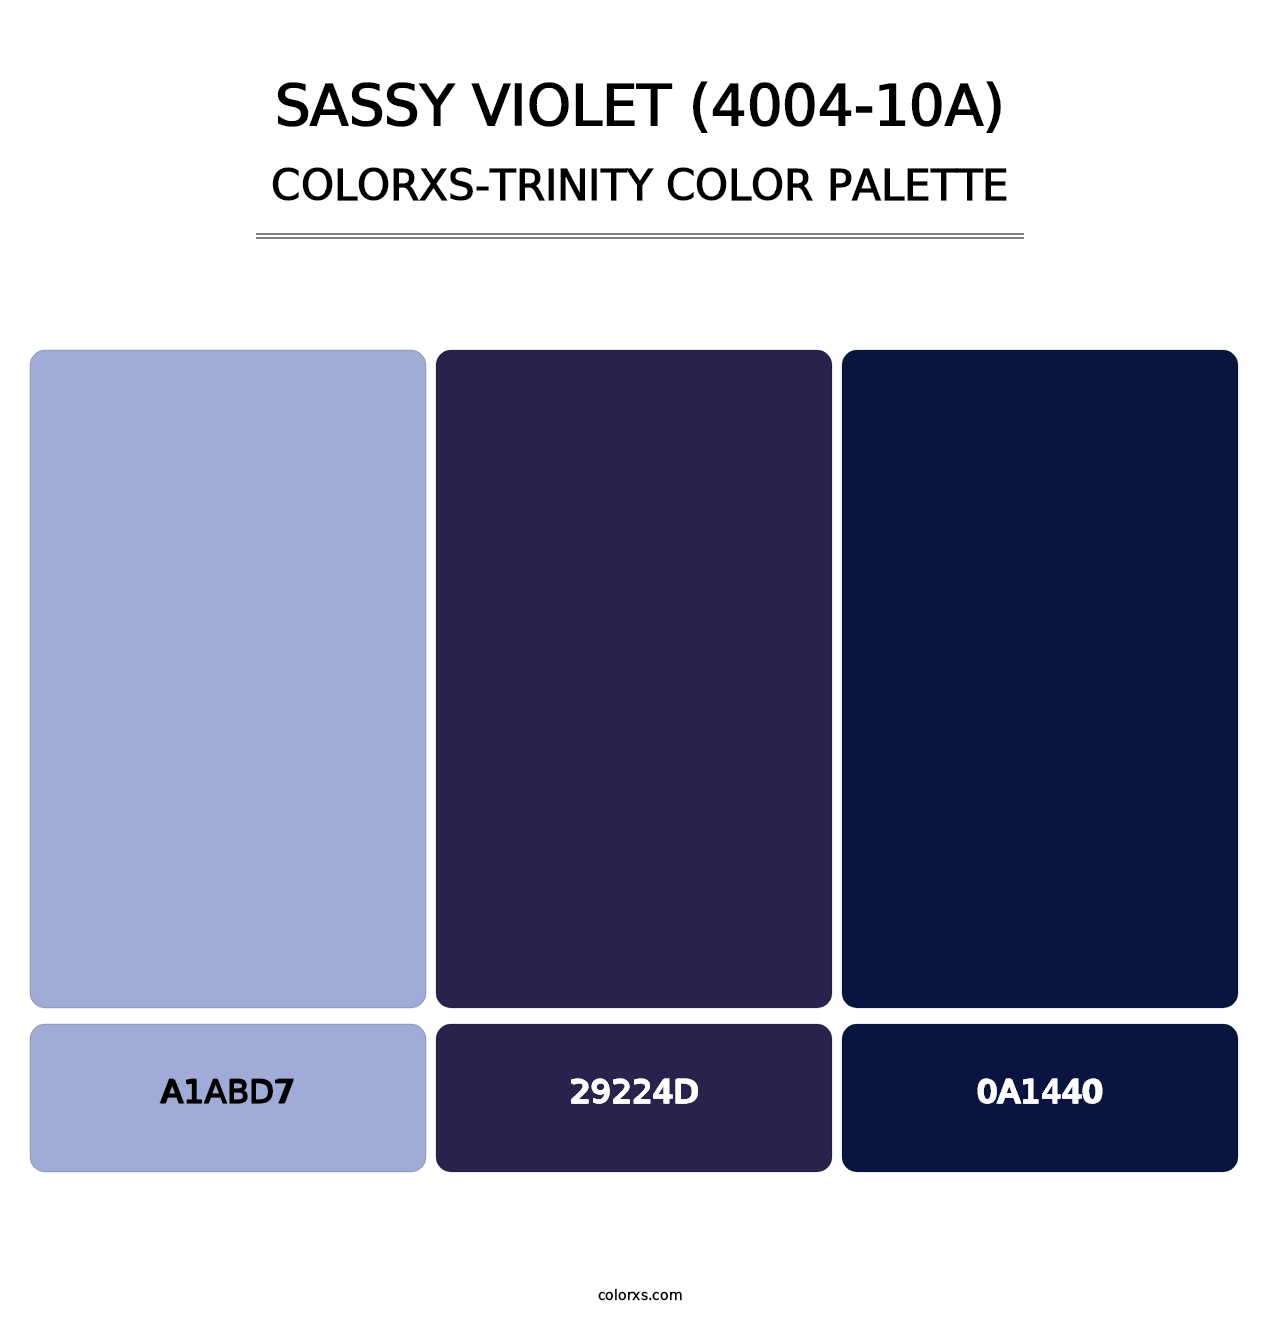 Sassy Violet (4004-10A) - Colorxs Trinity Palette